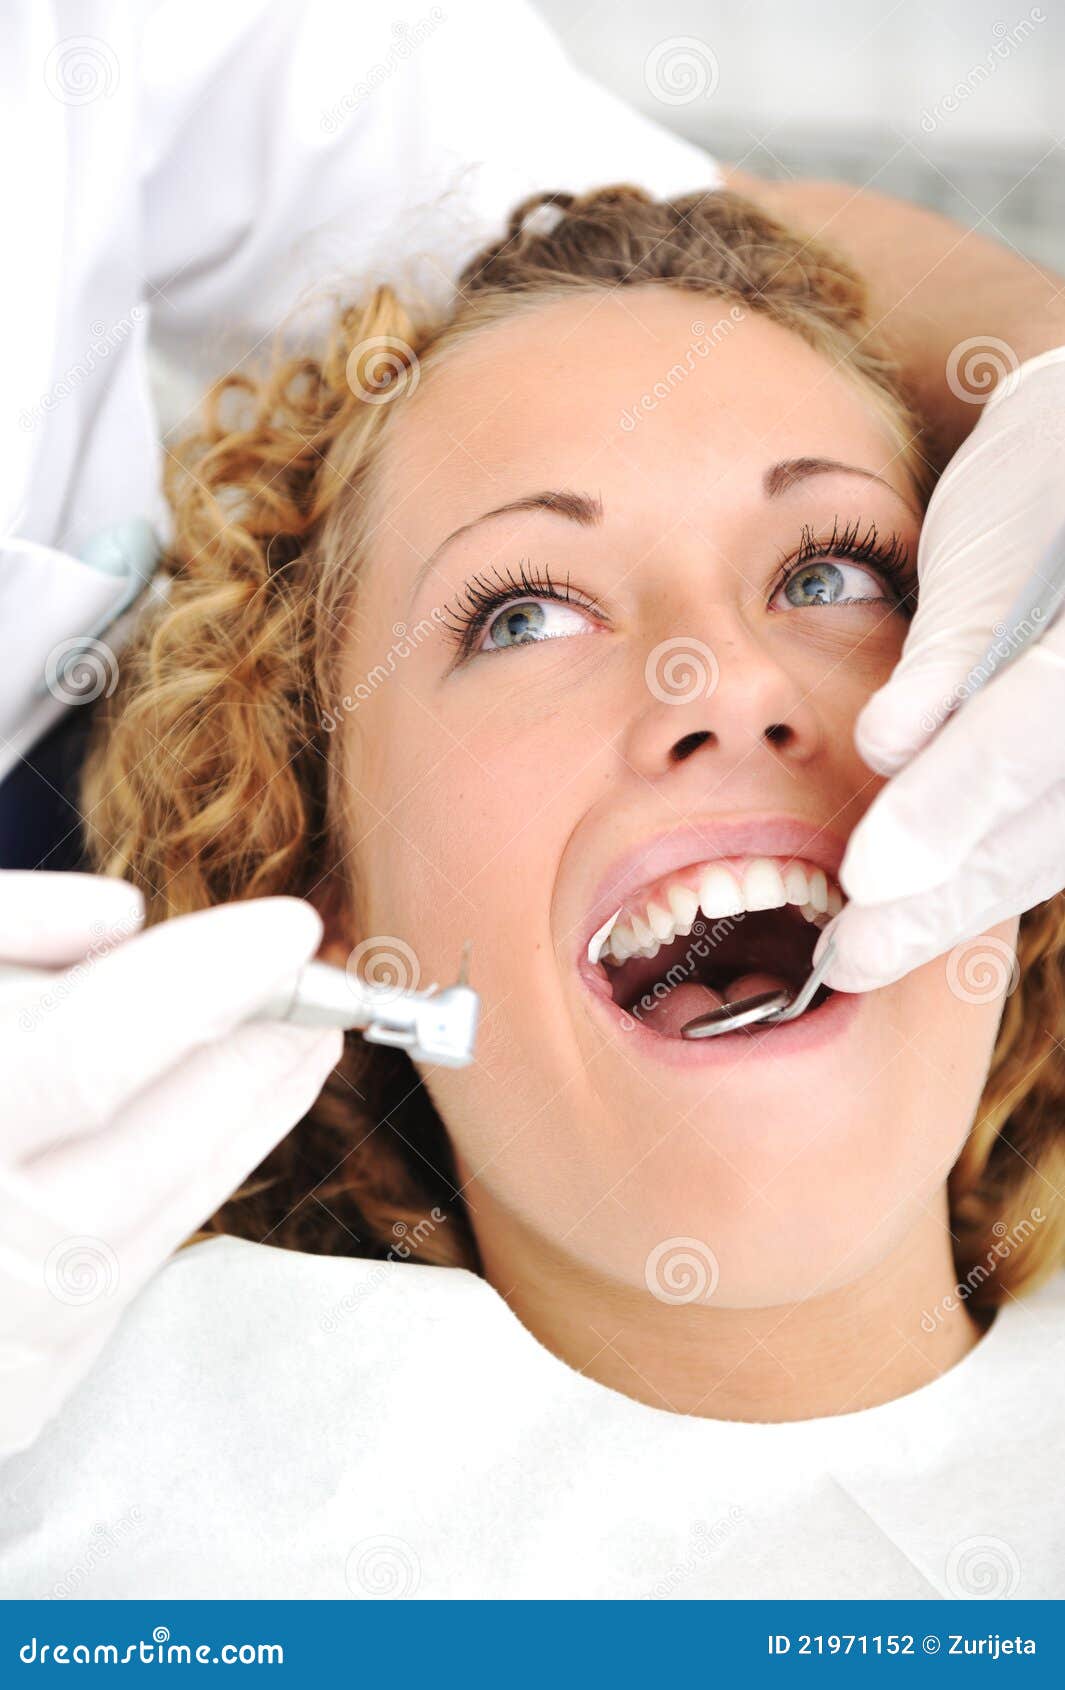 dentists teeth checkup